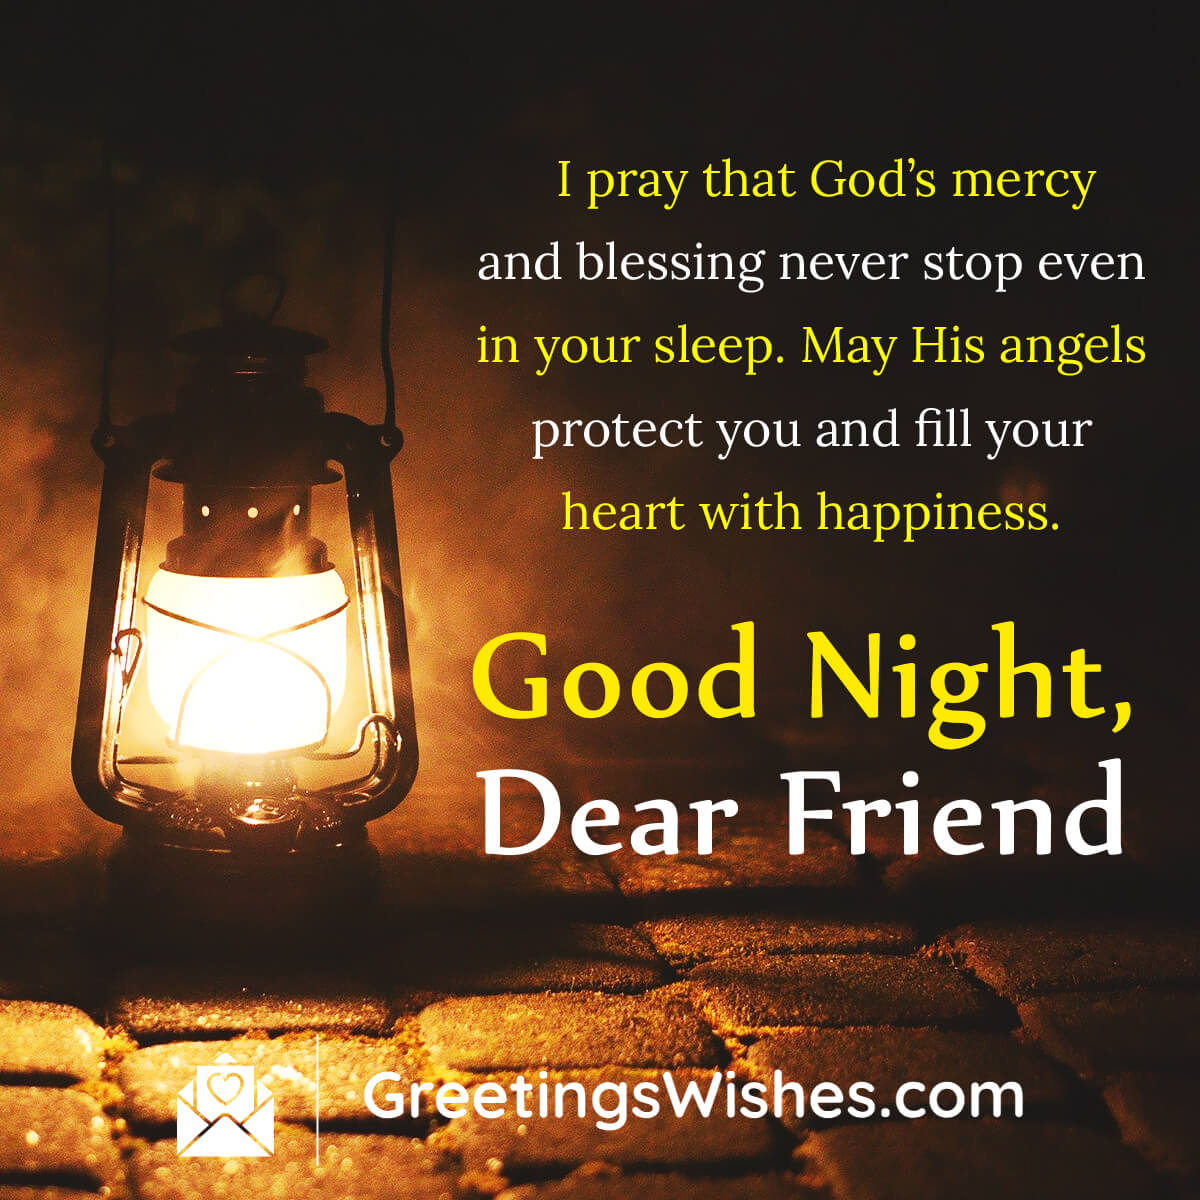 Good Night Prayer Wishes - Greetings Wishes